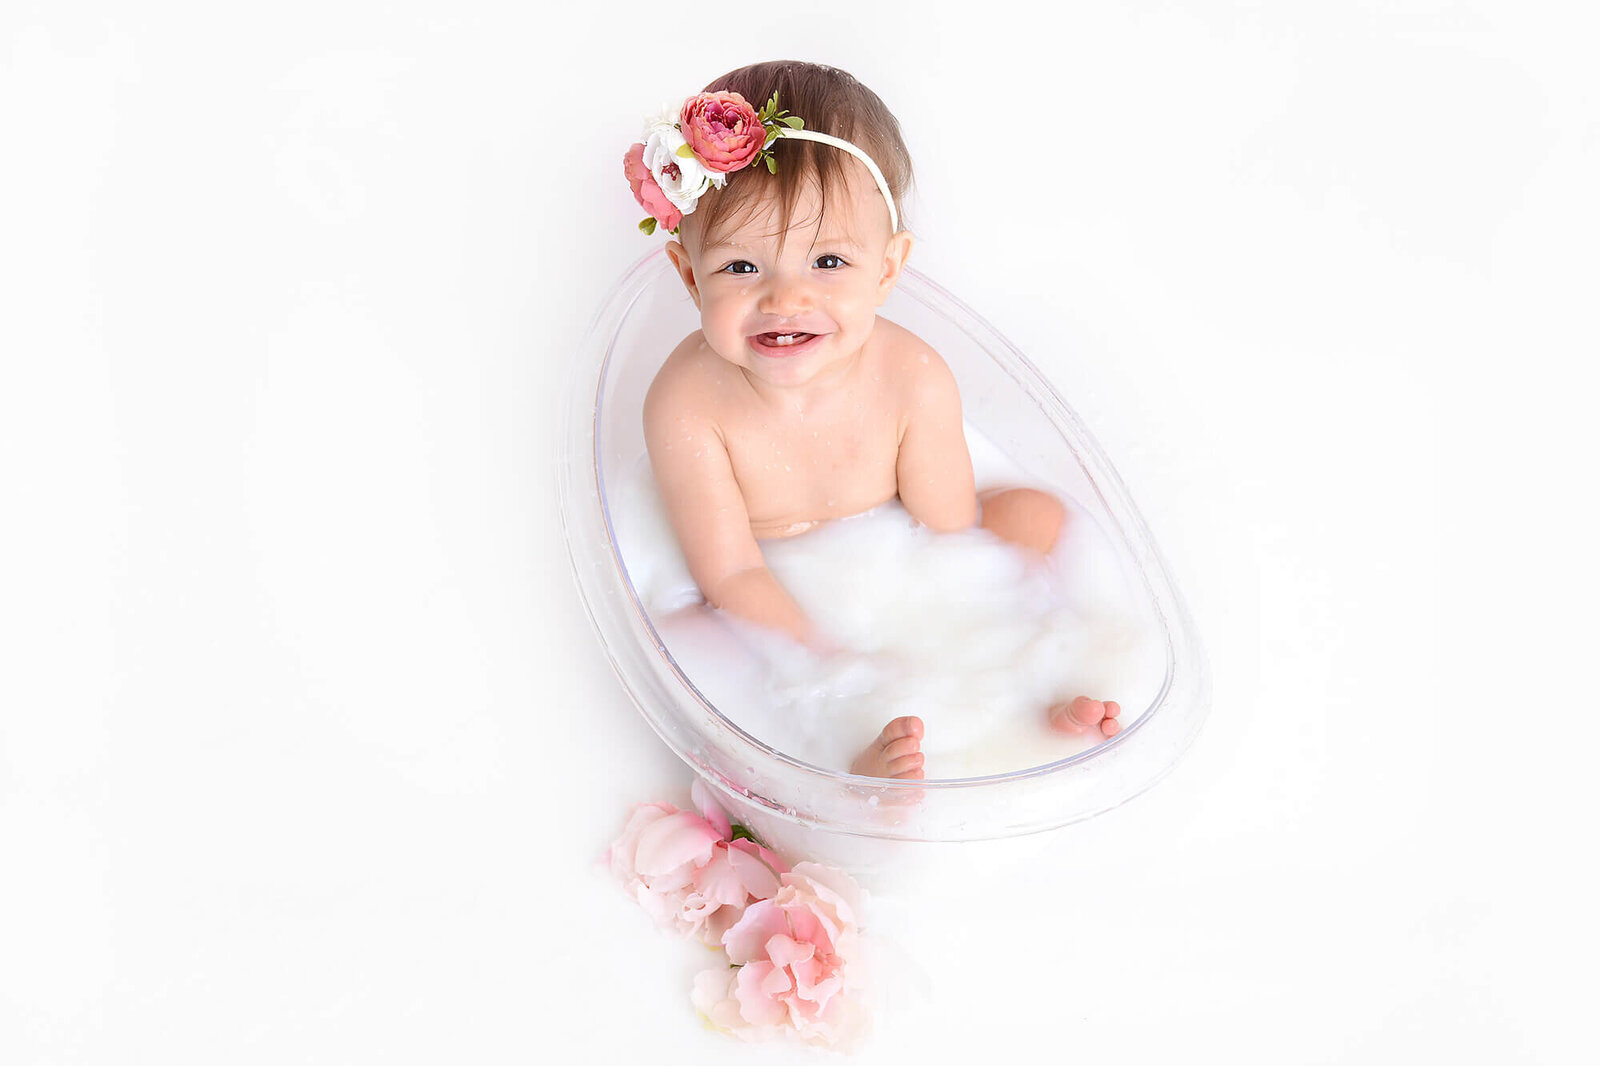 birthday girl smiles in a milk bath photoshoot